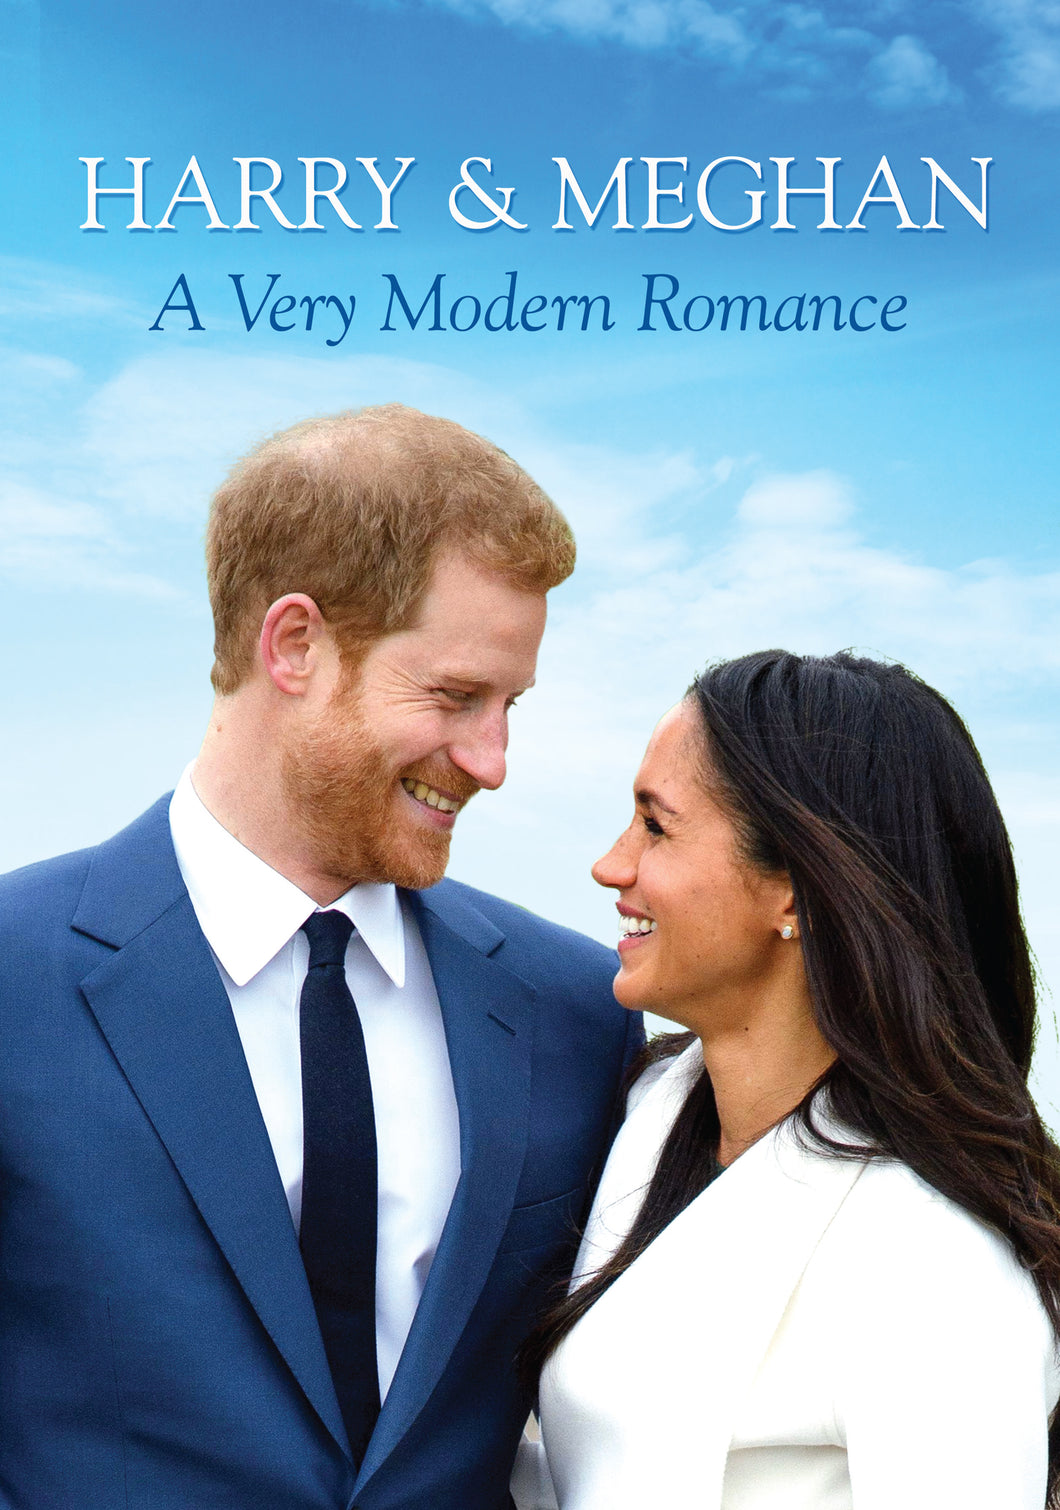 Harry & Meghan: A Very Modern Romance (DVD)